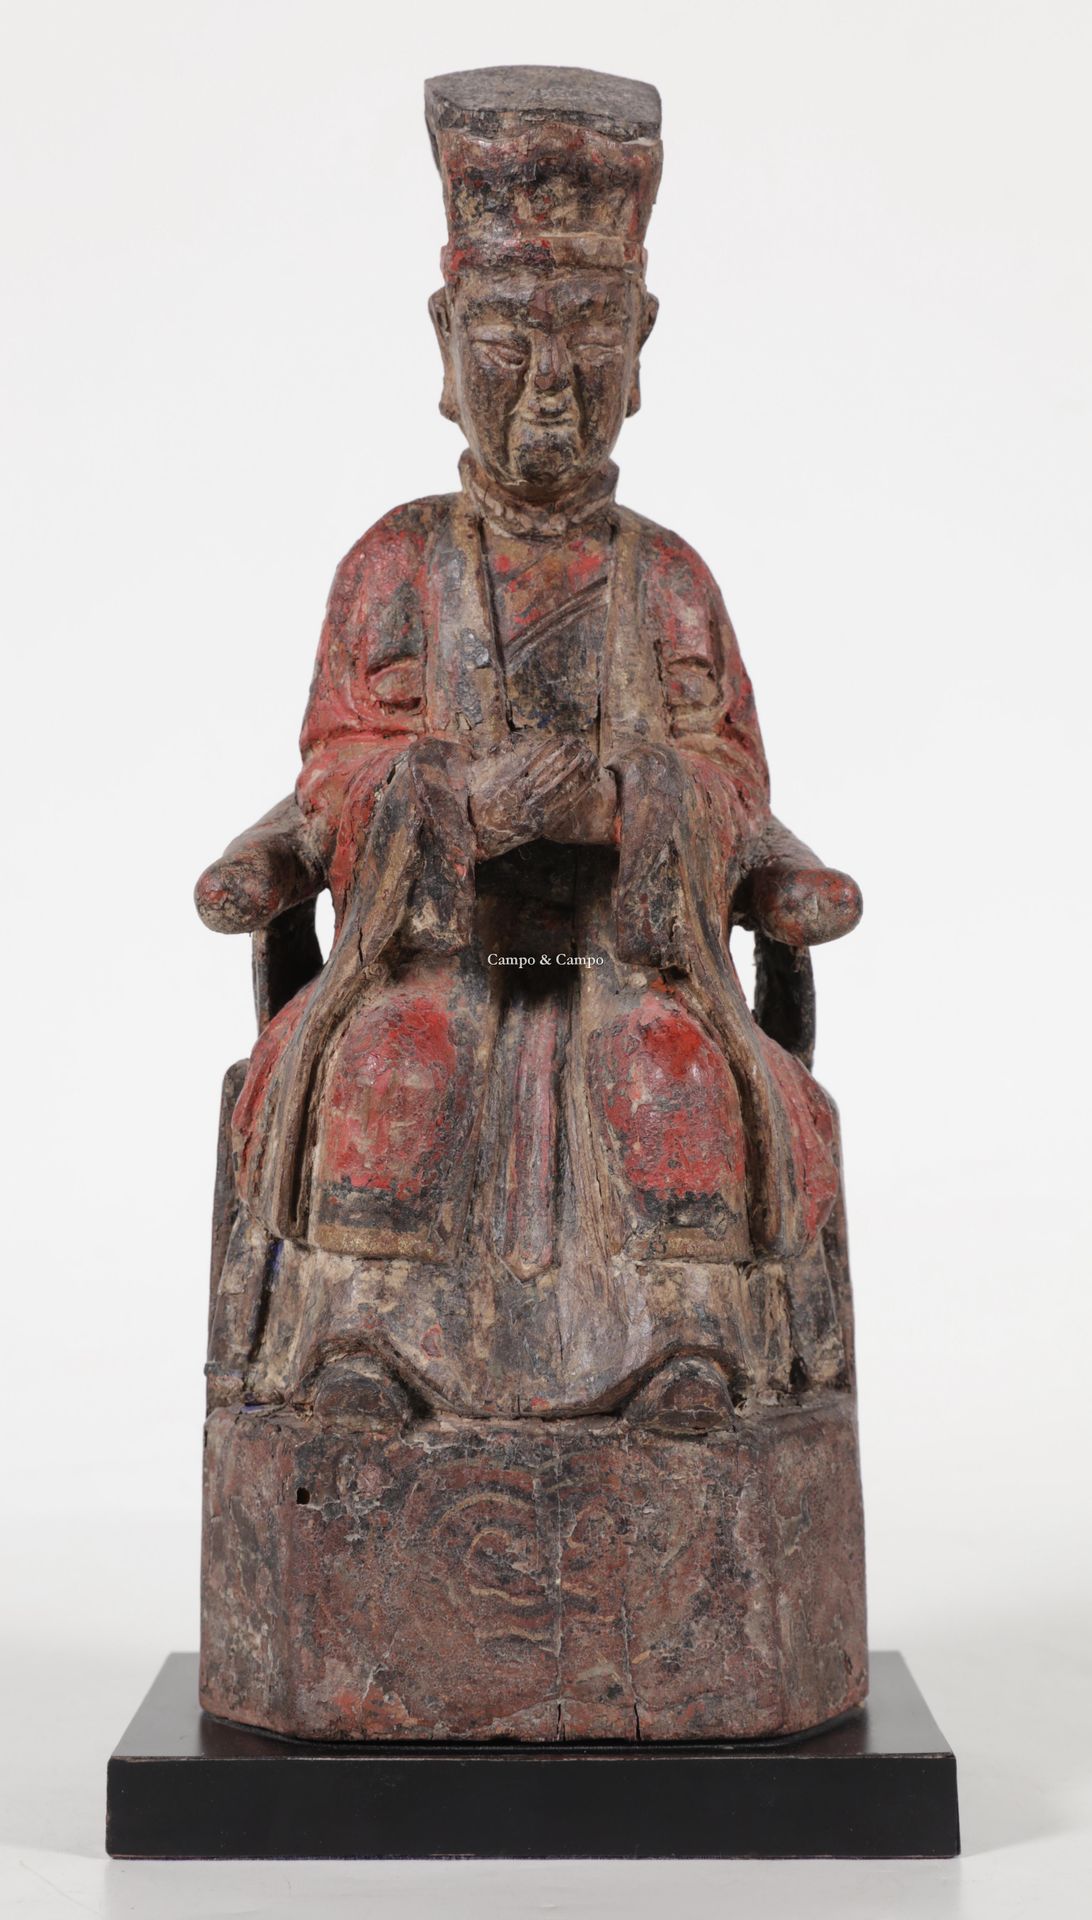 VARIA 1644-1912 Dieu assis,en bois polychromé
Zittende God van polychroom beschi&hellip;